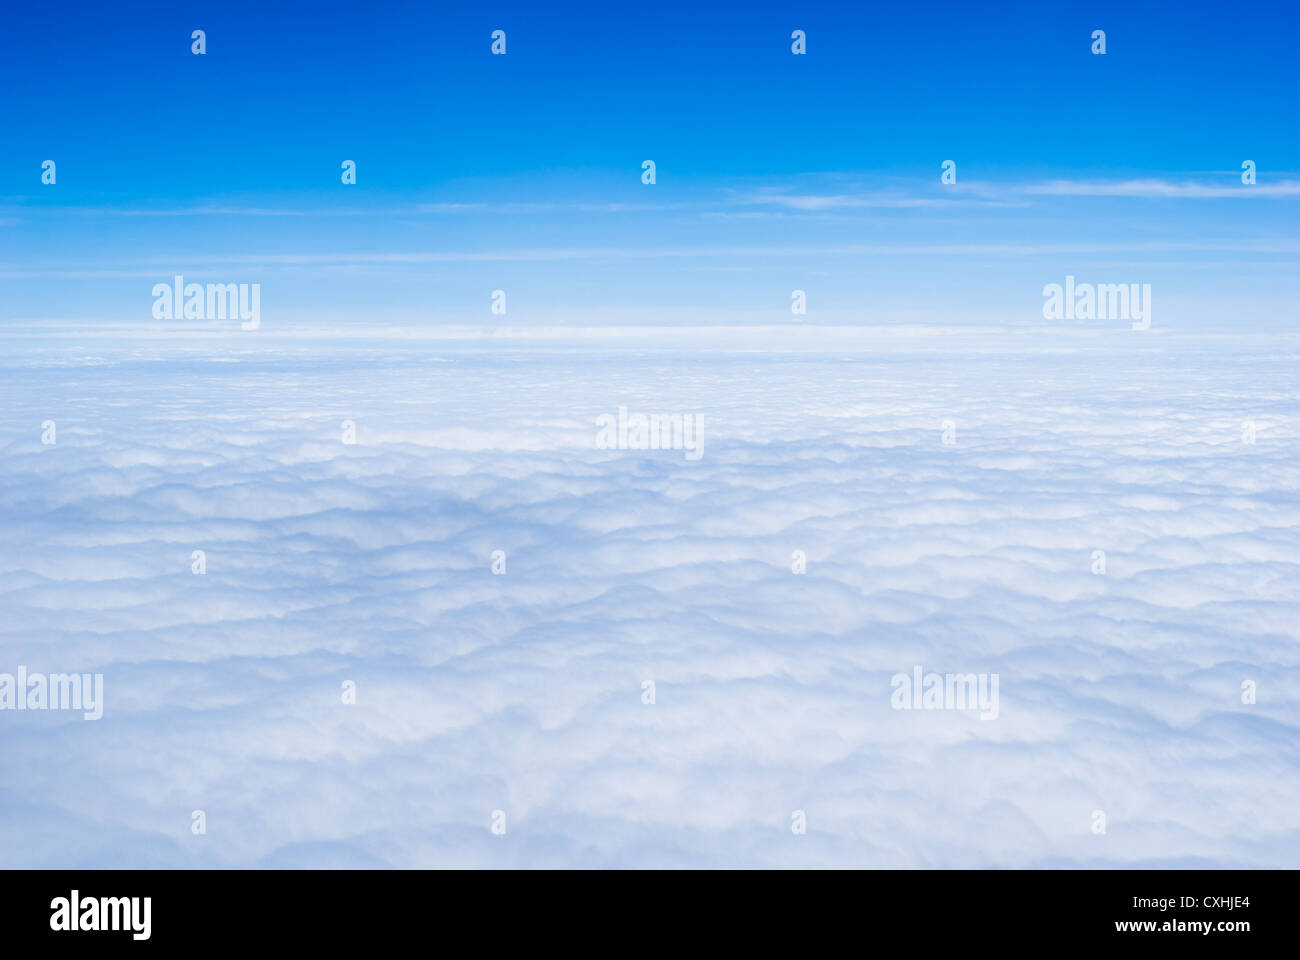 Sfondo con cielo nuvoloso Foto Stock